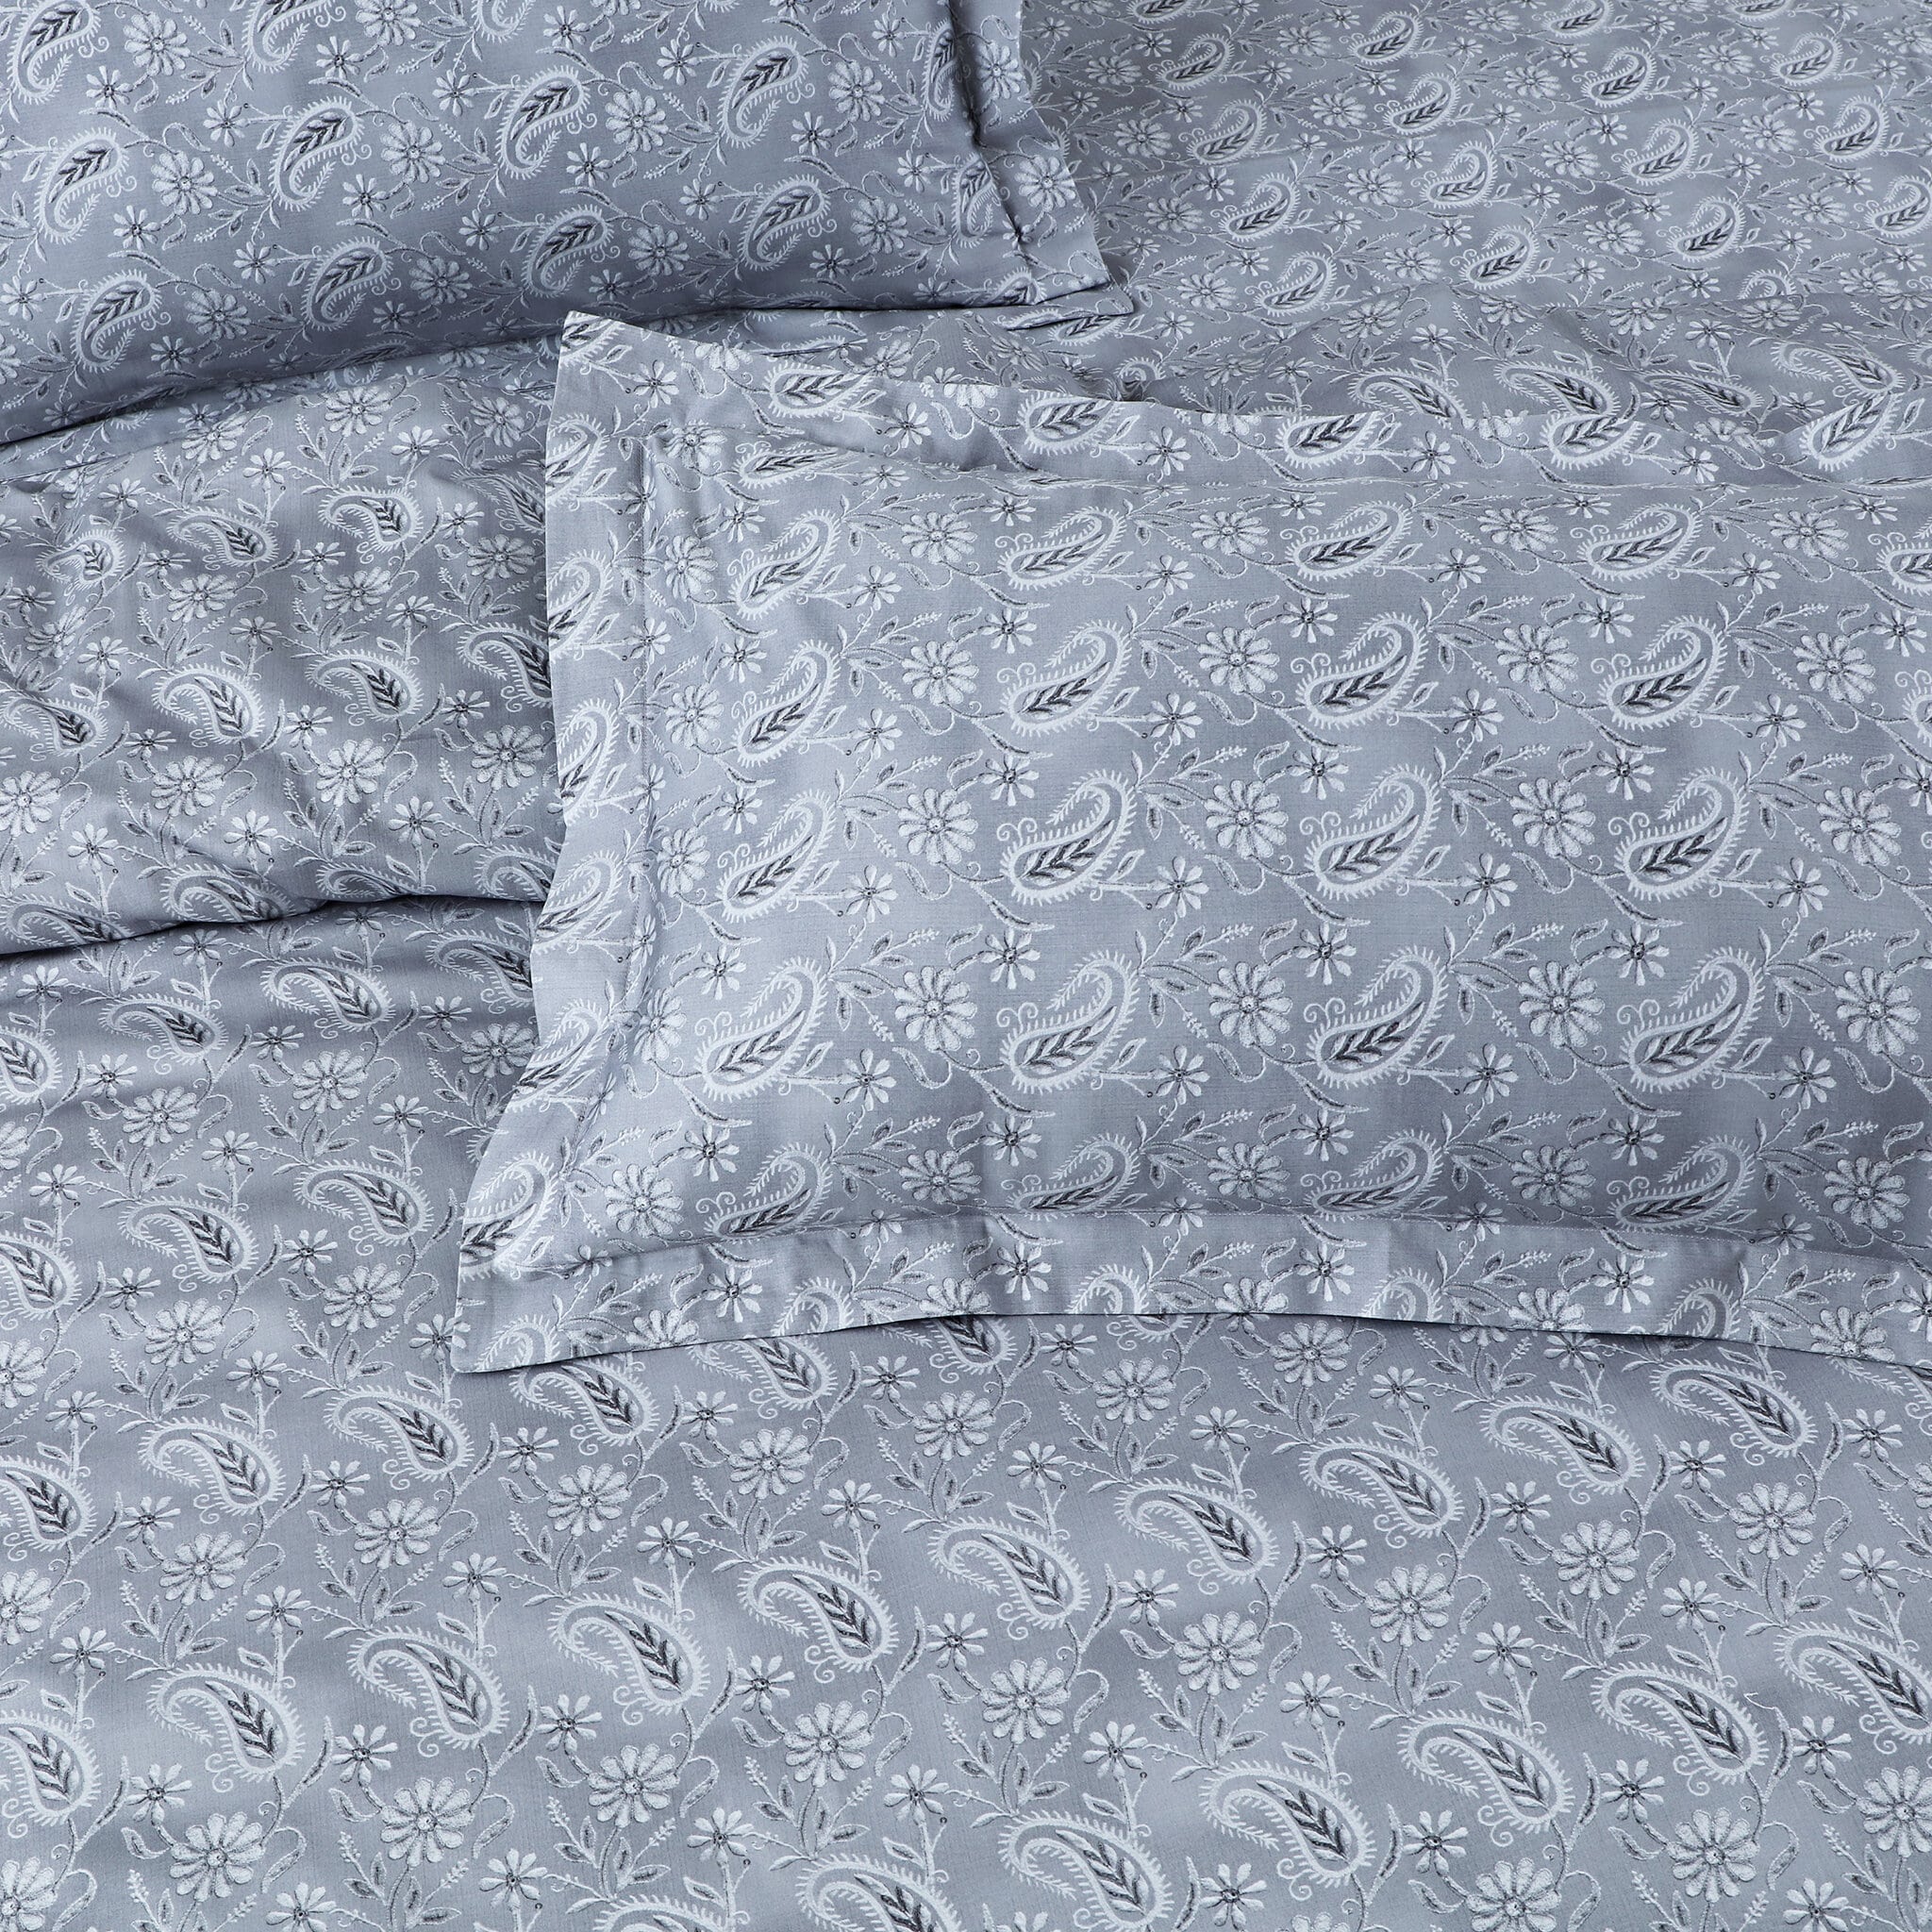 Malako Basel Bedding Set - Grey Paisley 100% Cotton King Size Bedsheet With Comforter